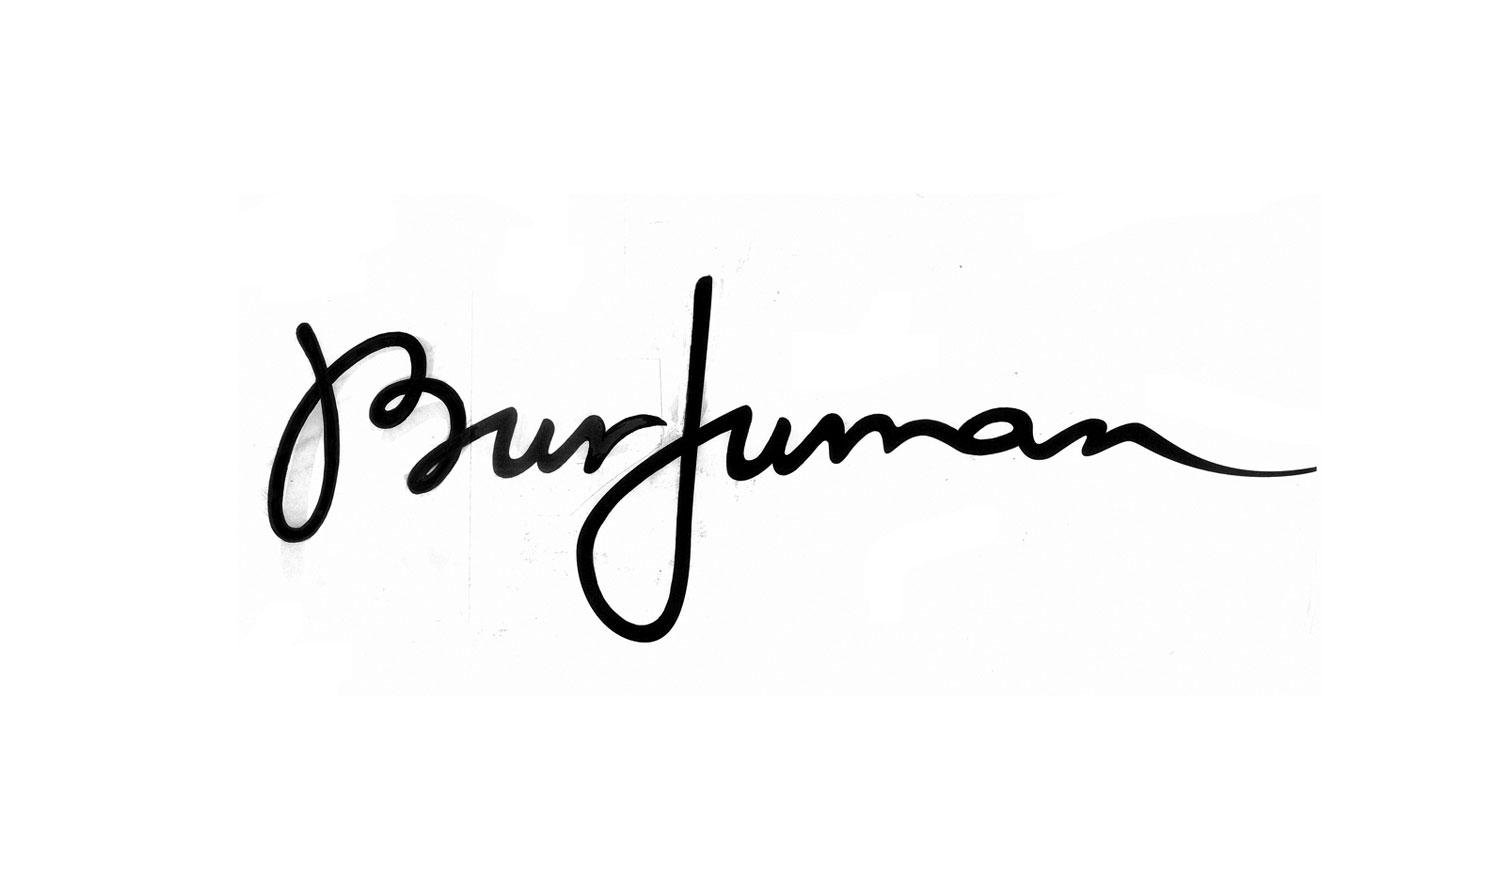 BurJuman-Evolution-of-Logos-07.jpg